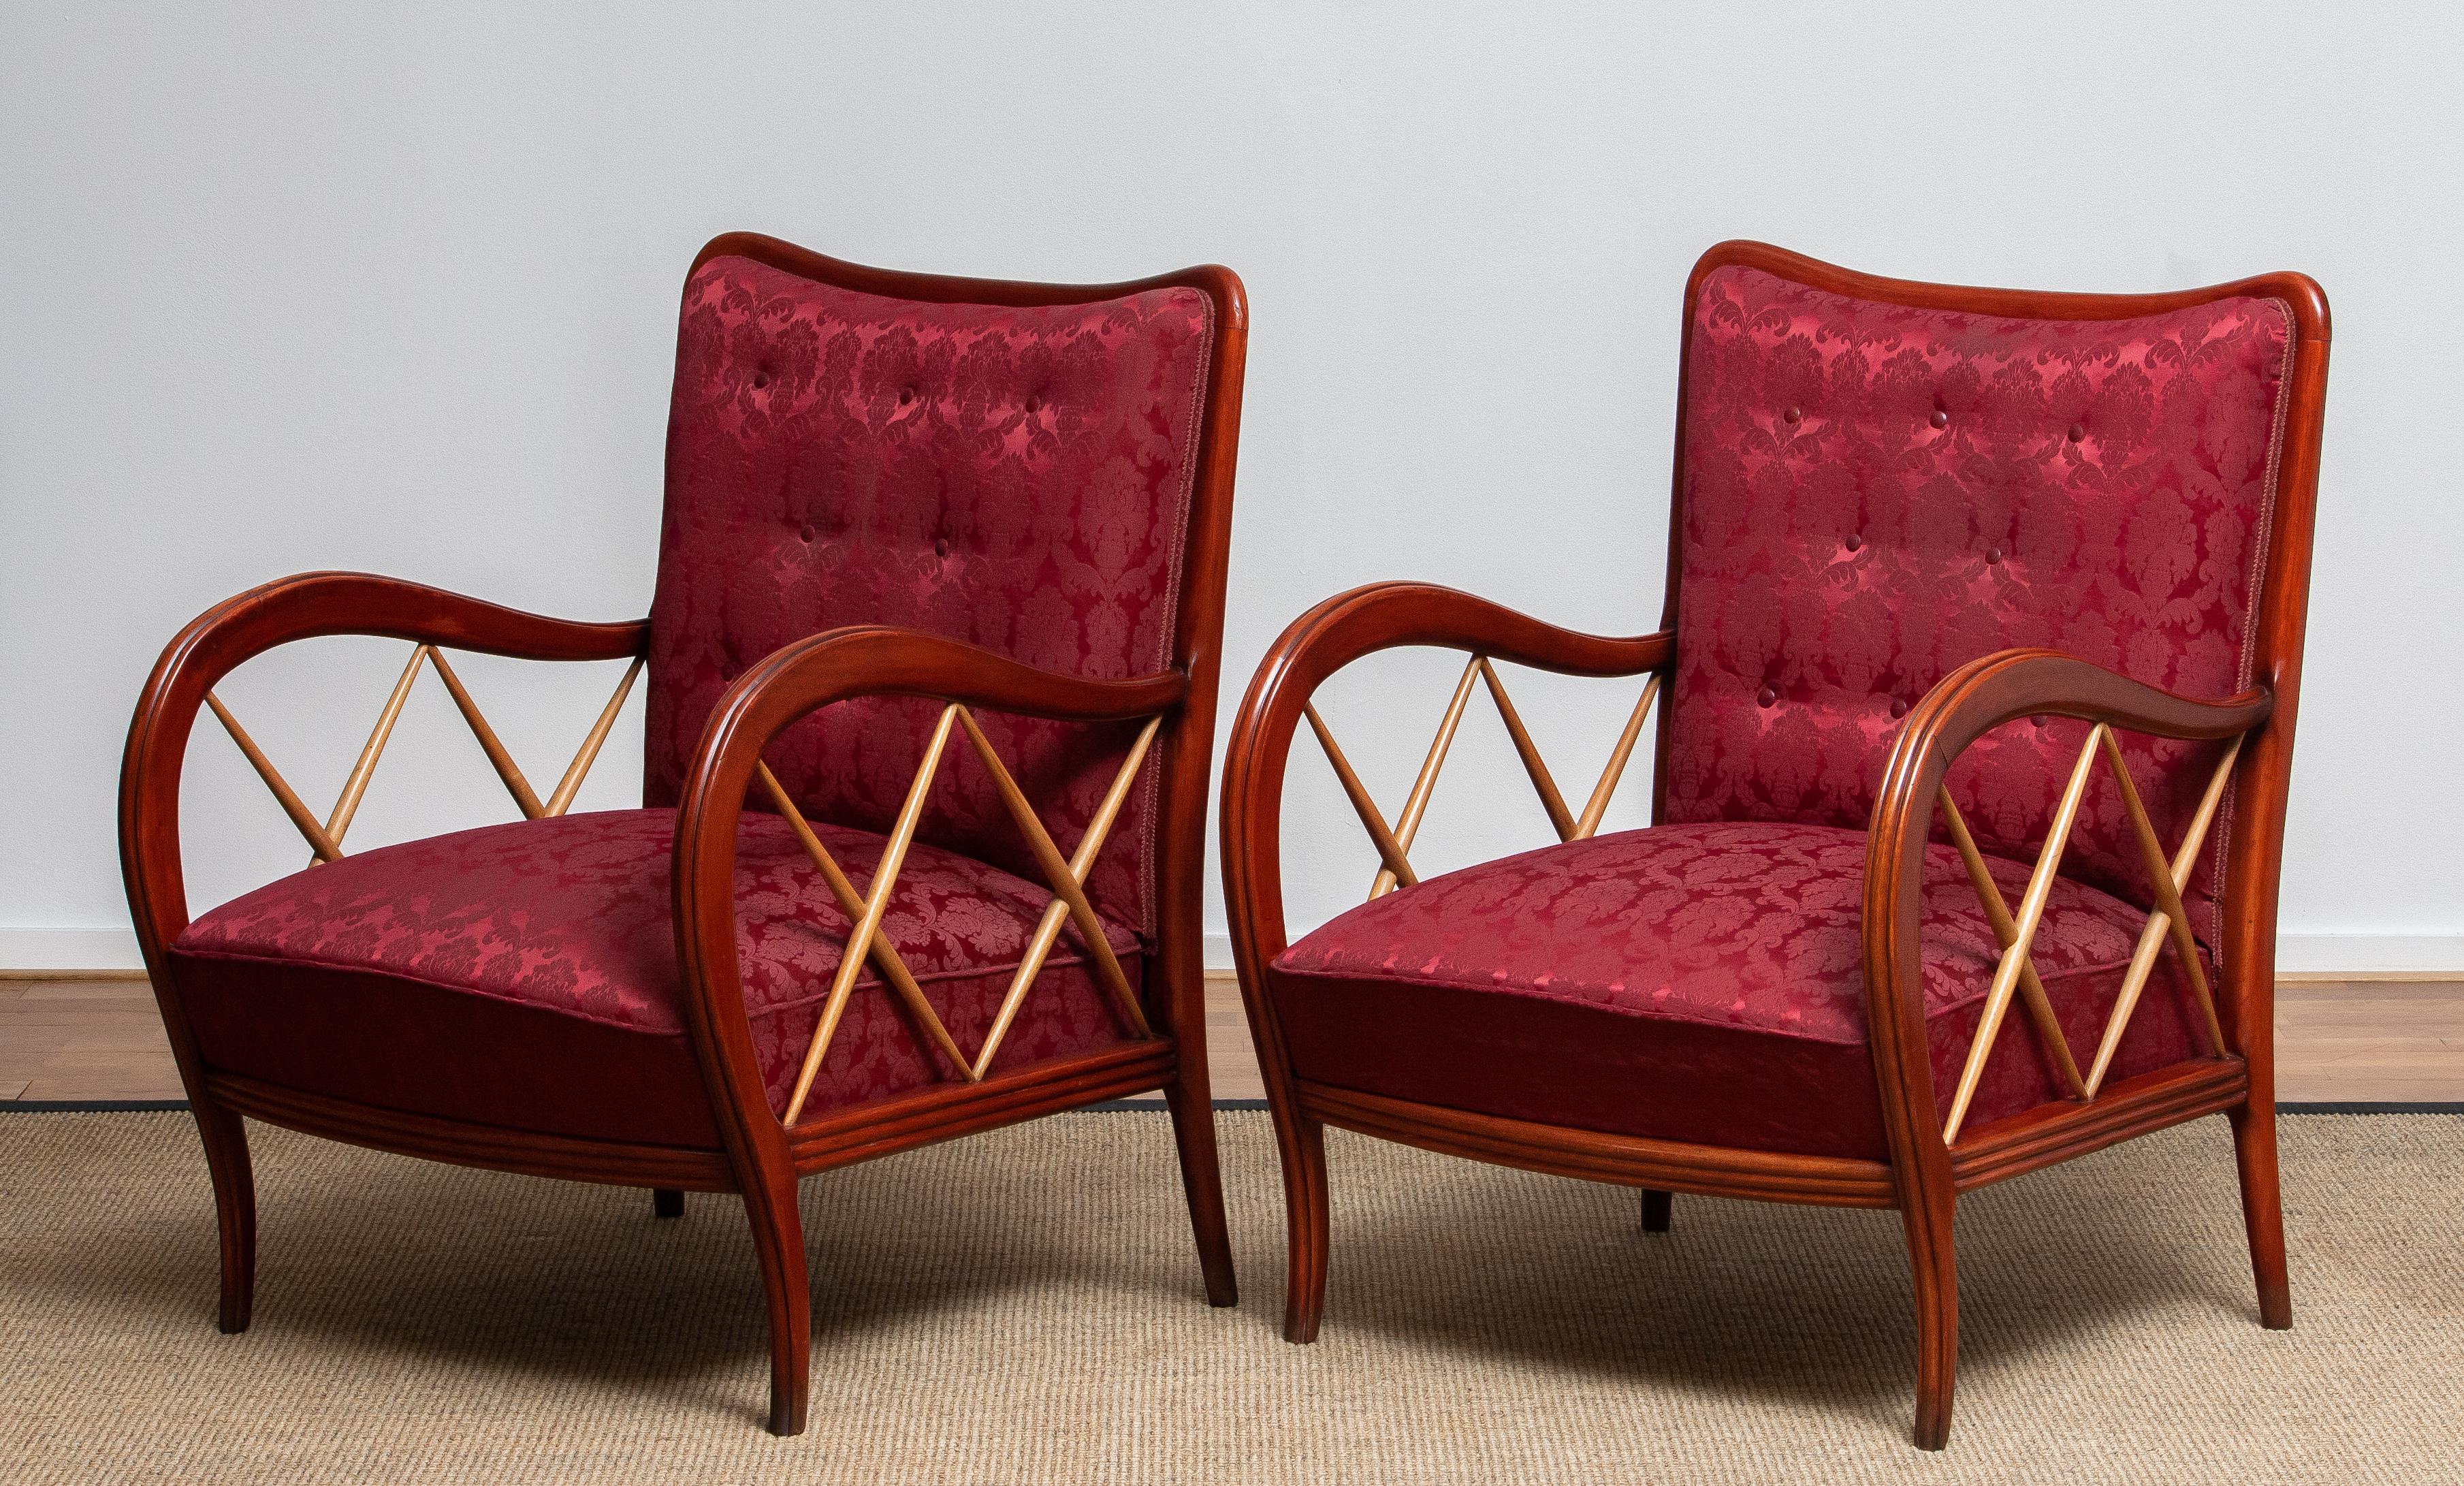 Mid-20th Century 1940s Italian Pair of Paolo Buffa Lounge Chairs in Mahogany and Beech